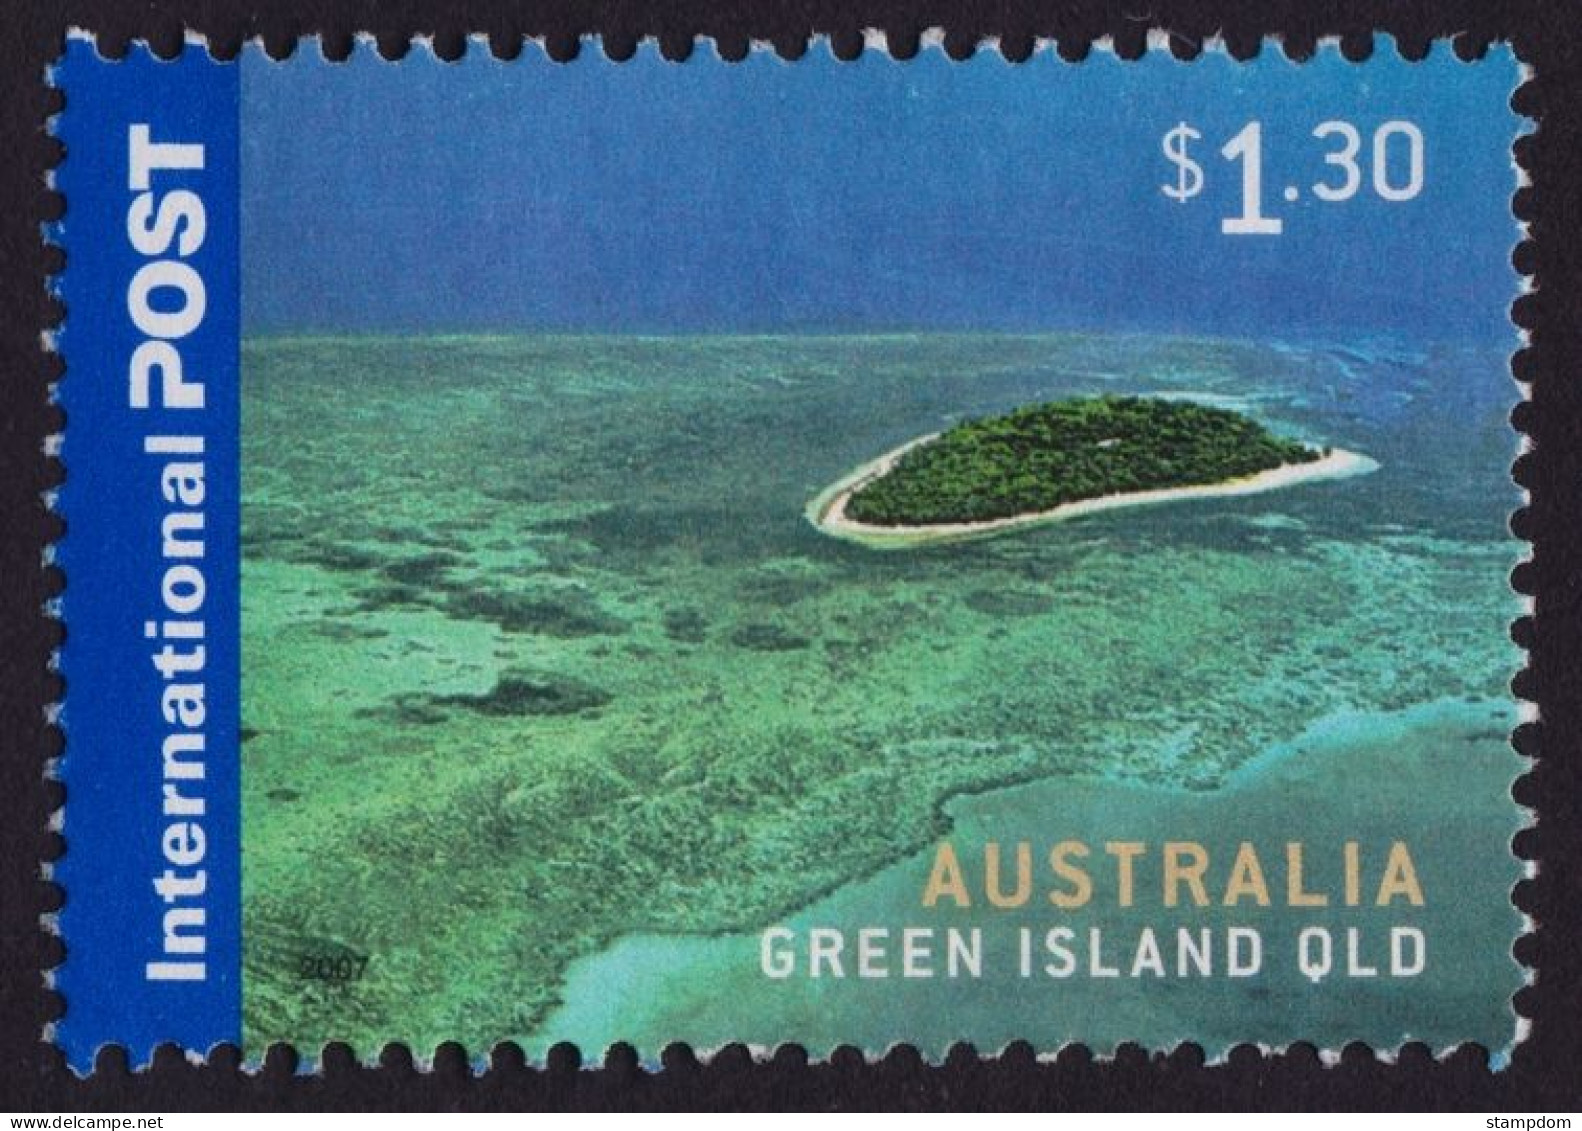 AUSTRALIA 2007 Islands $1.30 Green Island Sc#2629 USED @O425 - Used Stamps